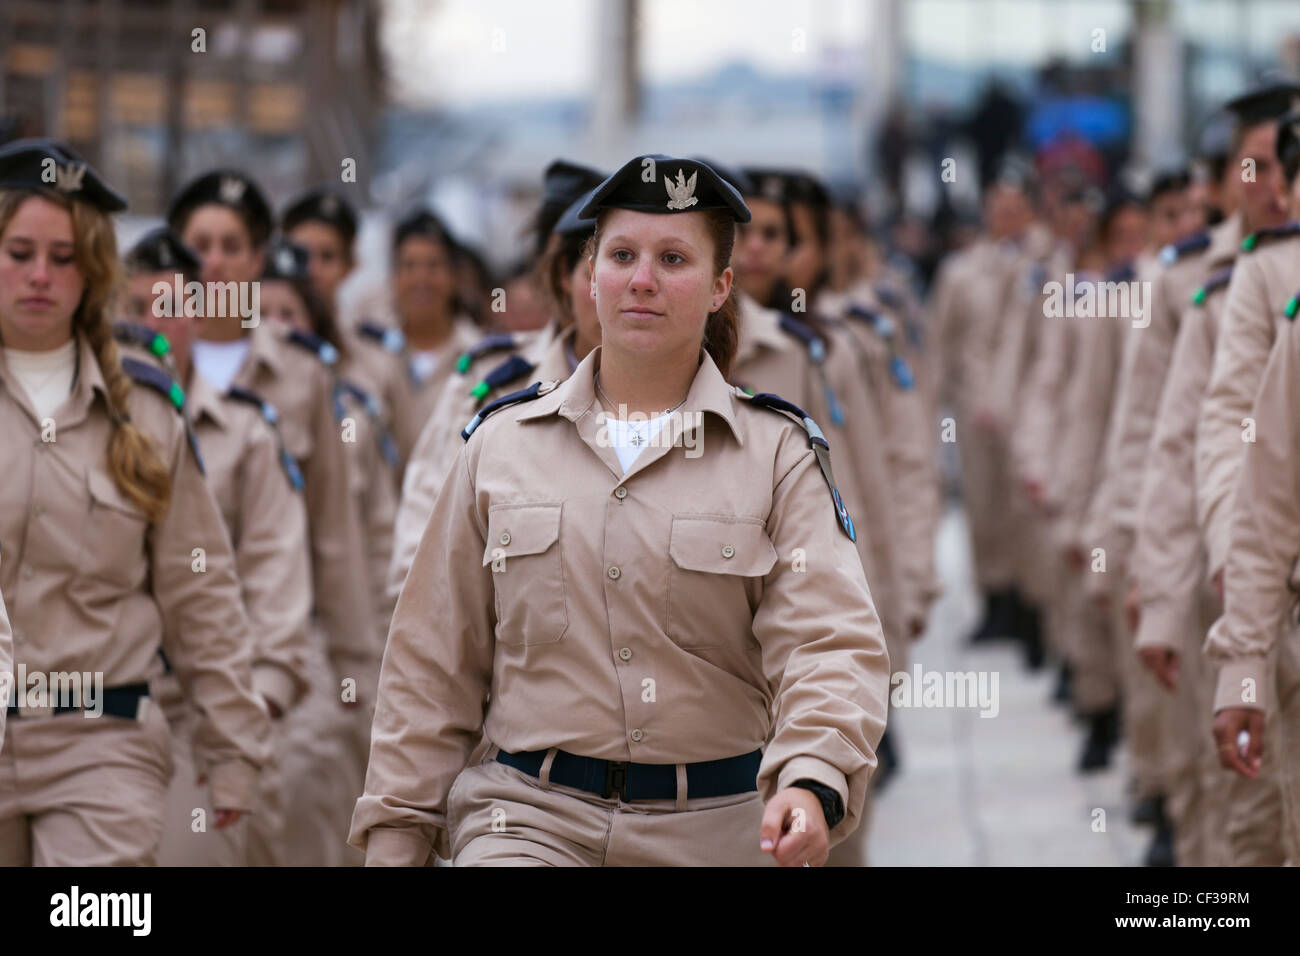 Israel,Jerusalem,Wailing Wall, women soldiers on parade Stock Photo